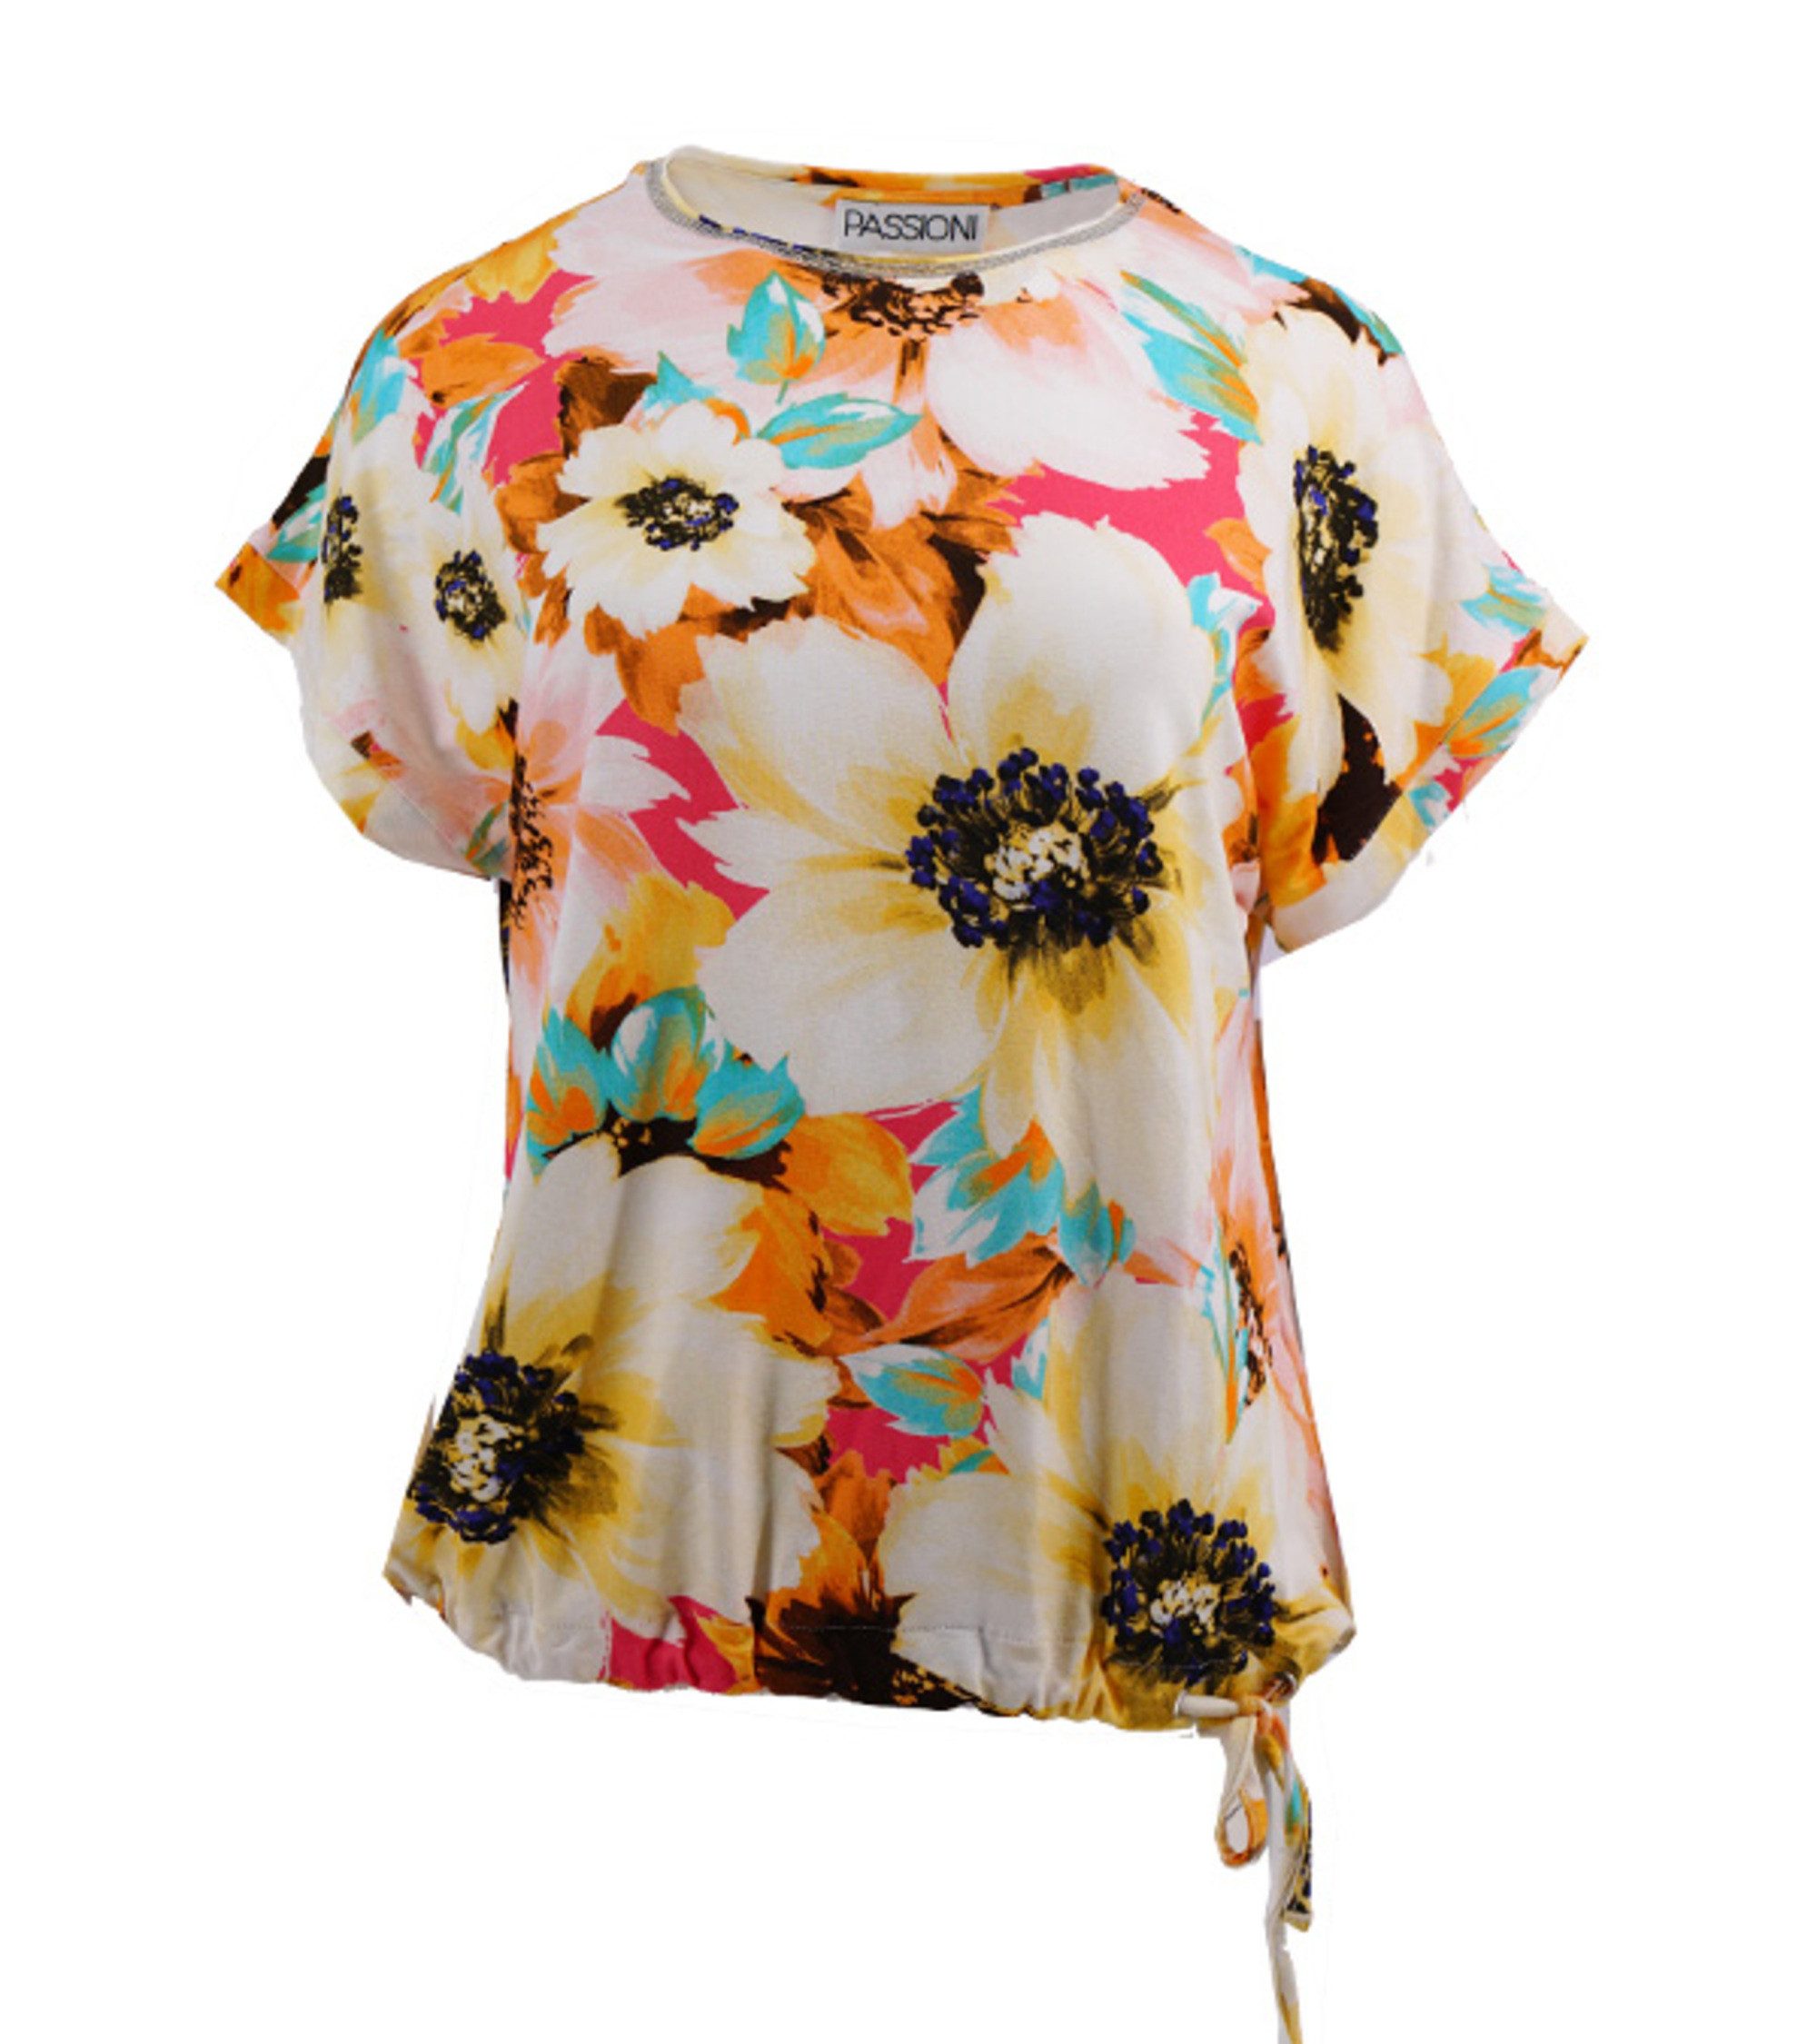 Passioni T-Shirt T-Shirt mit Blumenprint und Sommerfarben mit Print